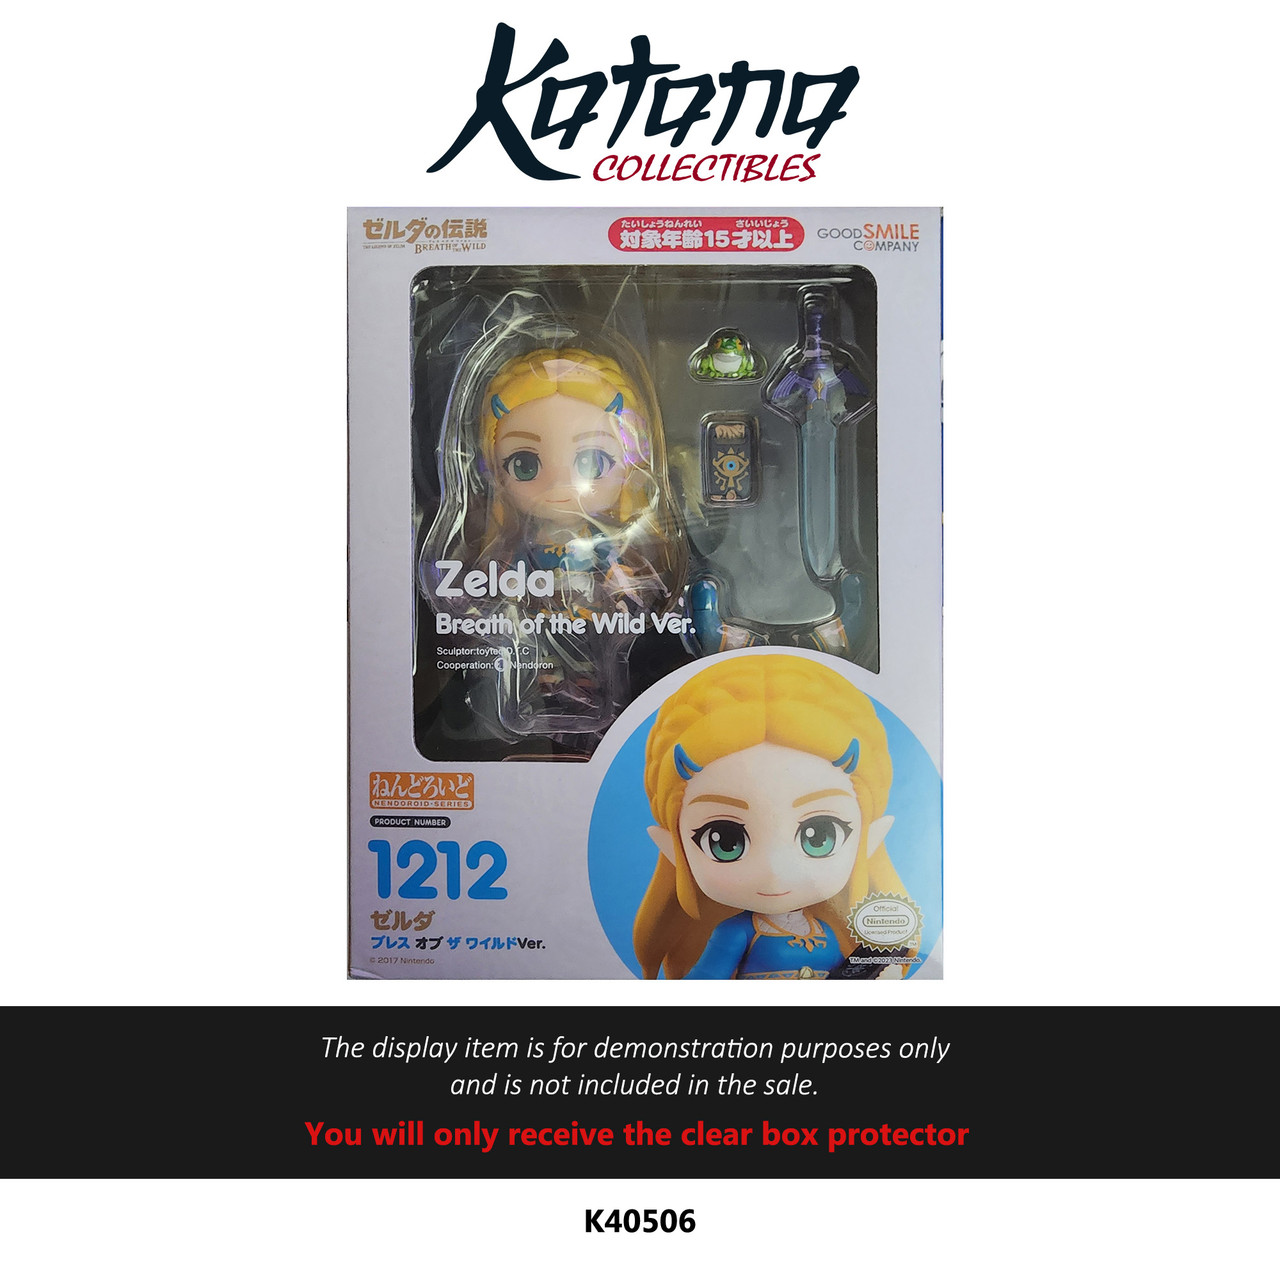 Katana Collectibles Protector For Nendoroid 1212: Zelda (Breath of the Wild)